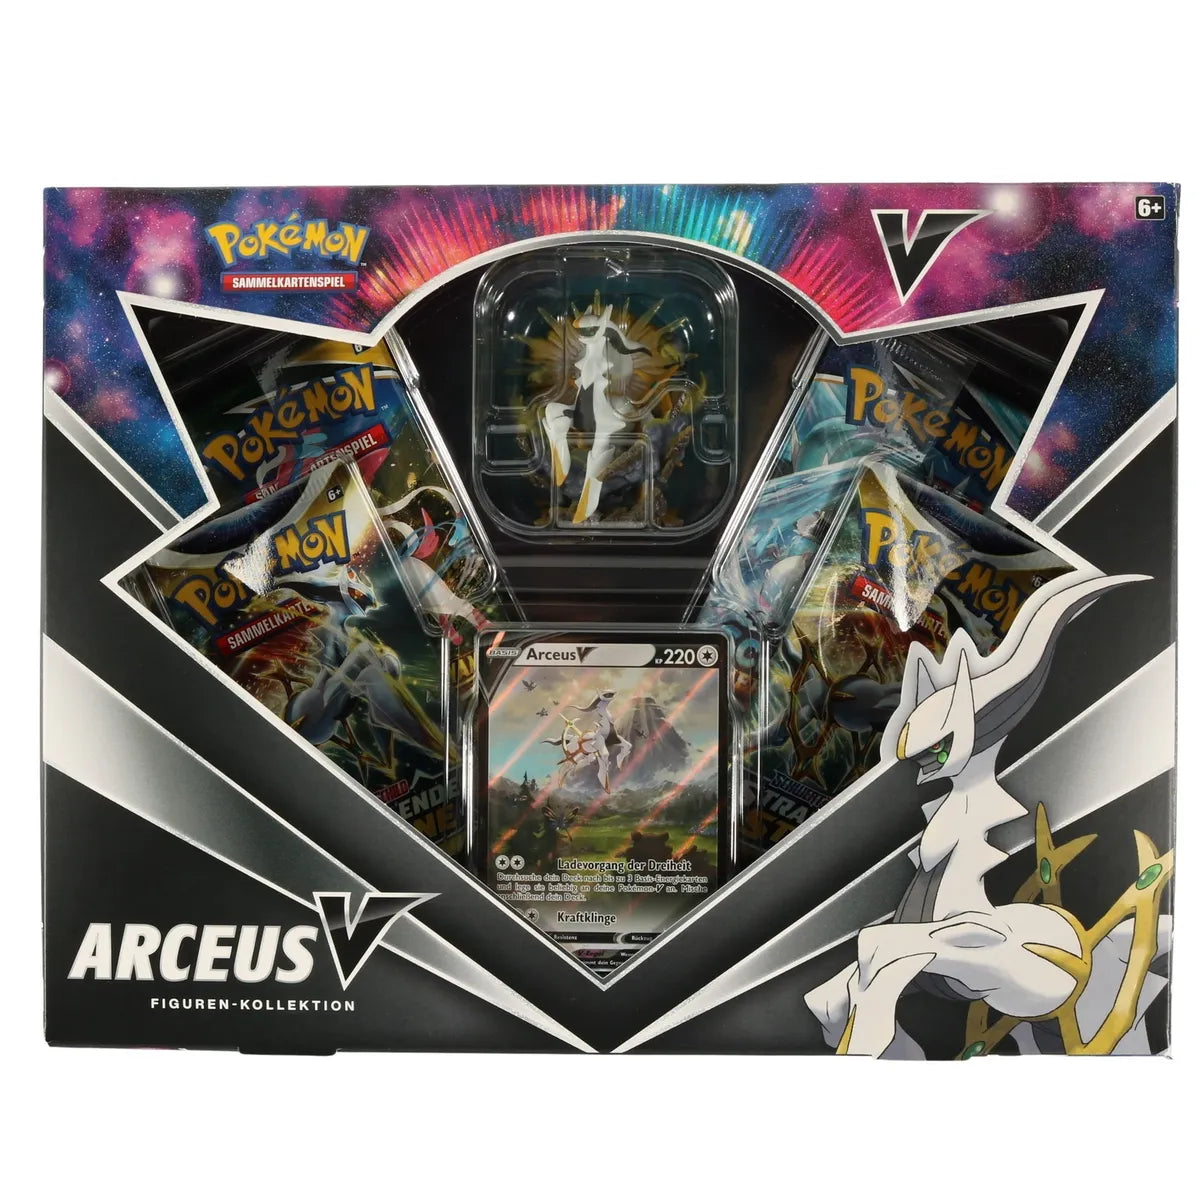 Pokémon TCG Arceus V Figuren-Kollektion Box Deutsch